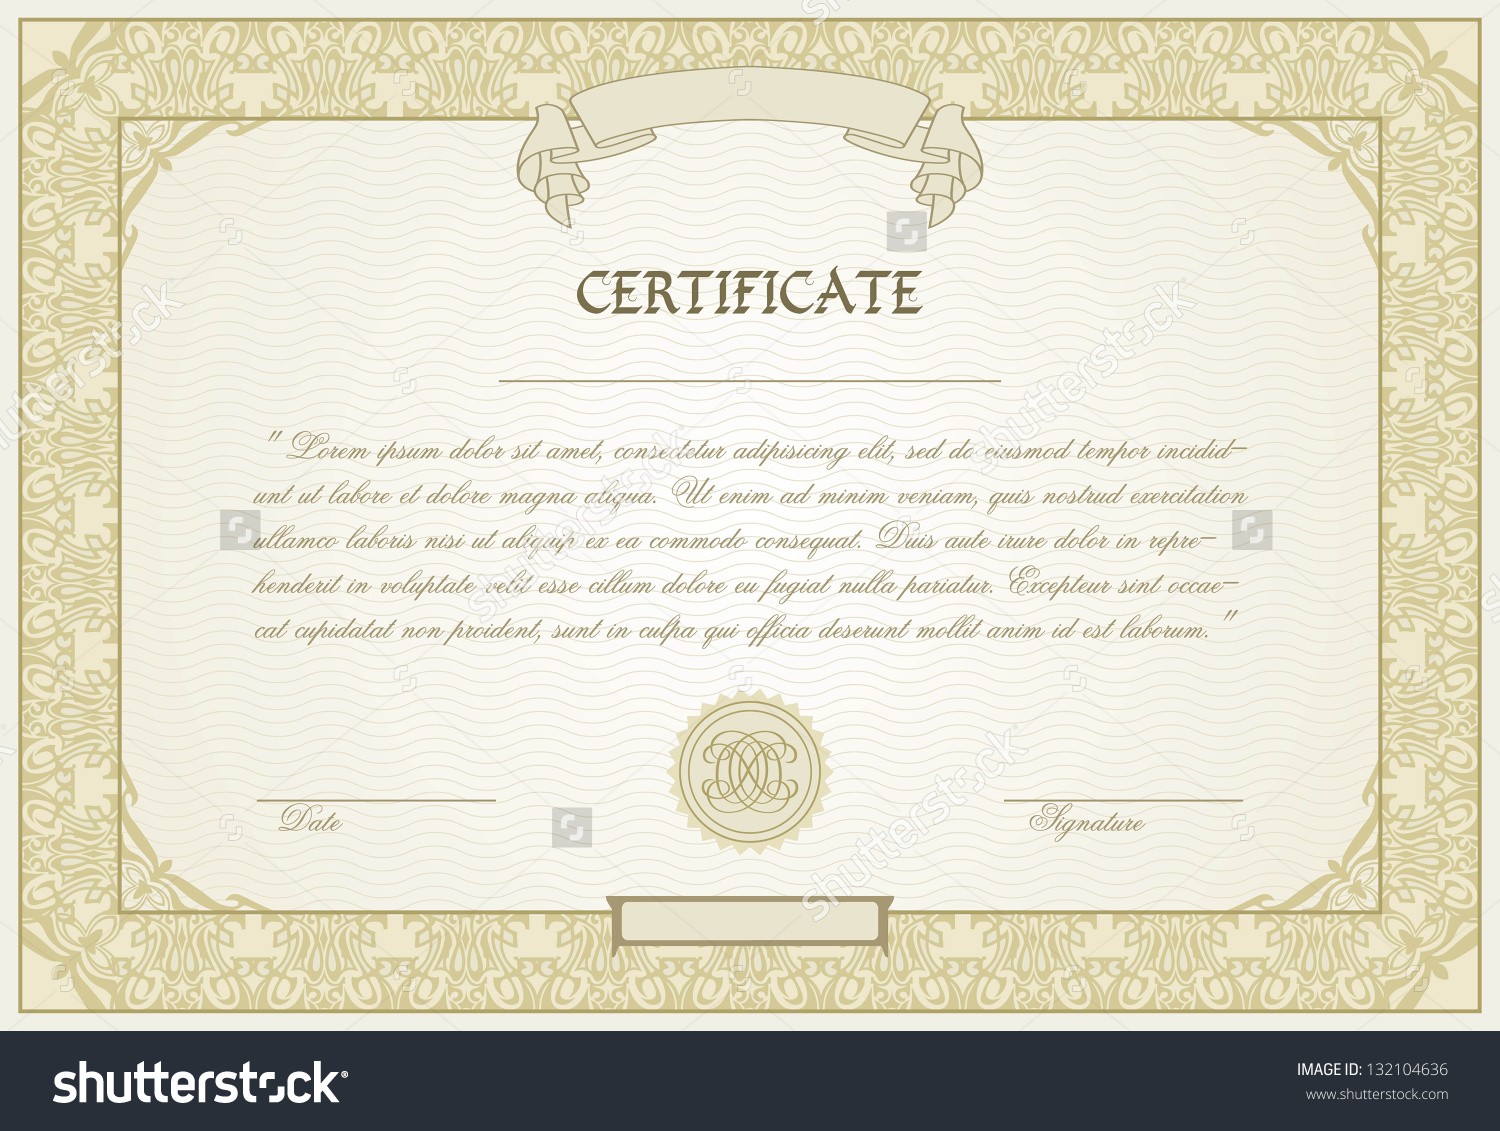 Long Service Certificate Template Sample Zrom